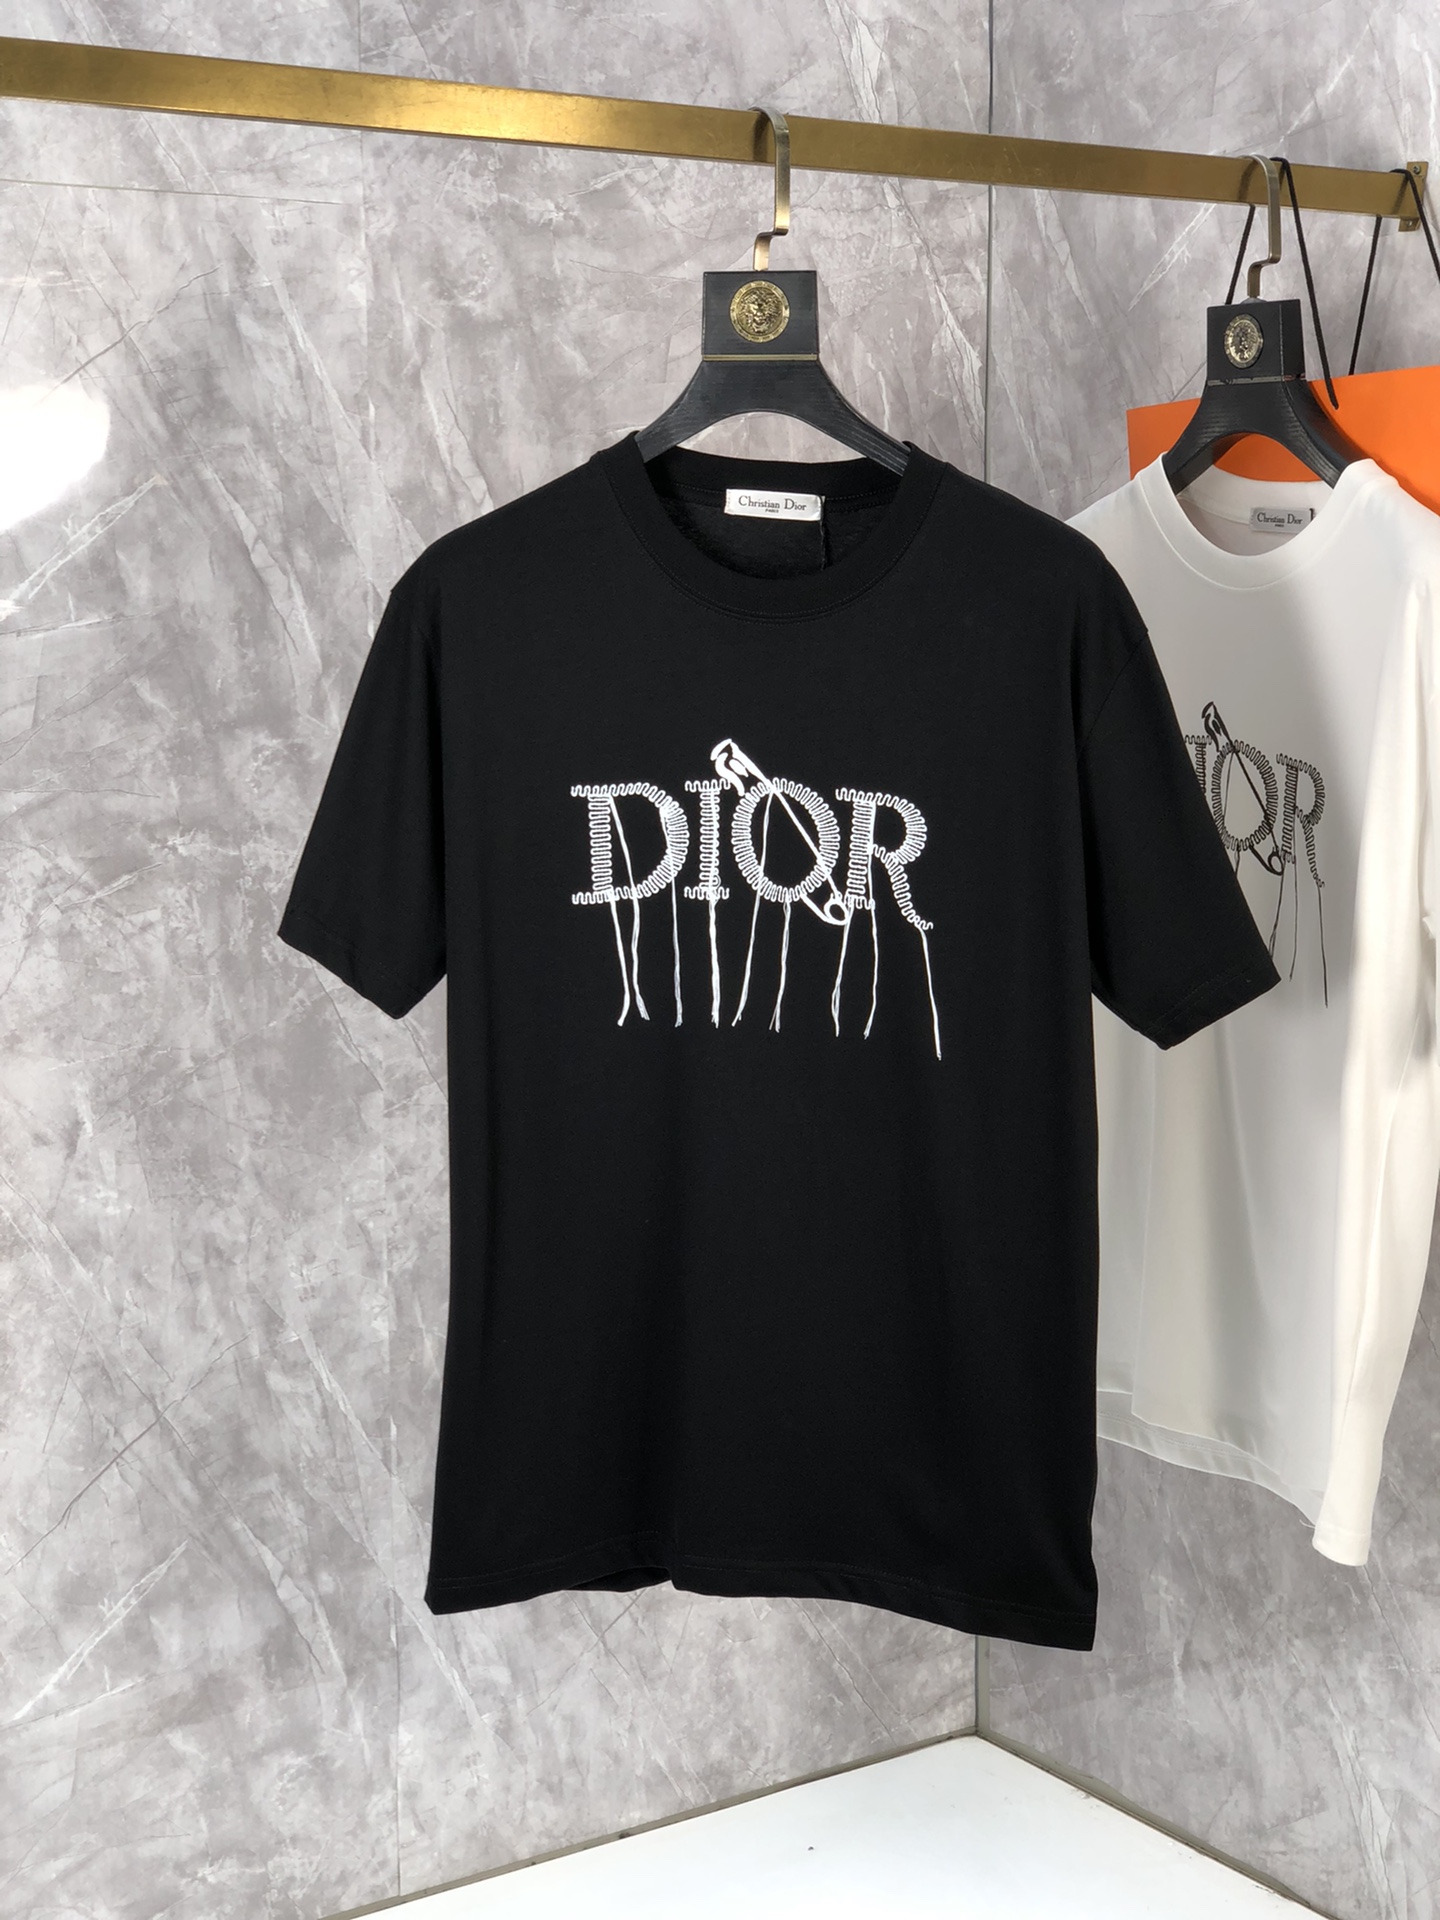 Find replica
 Dior Clothing T-Shirt Cotton Fashion Short Sleeve